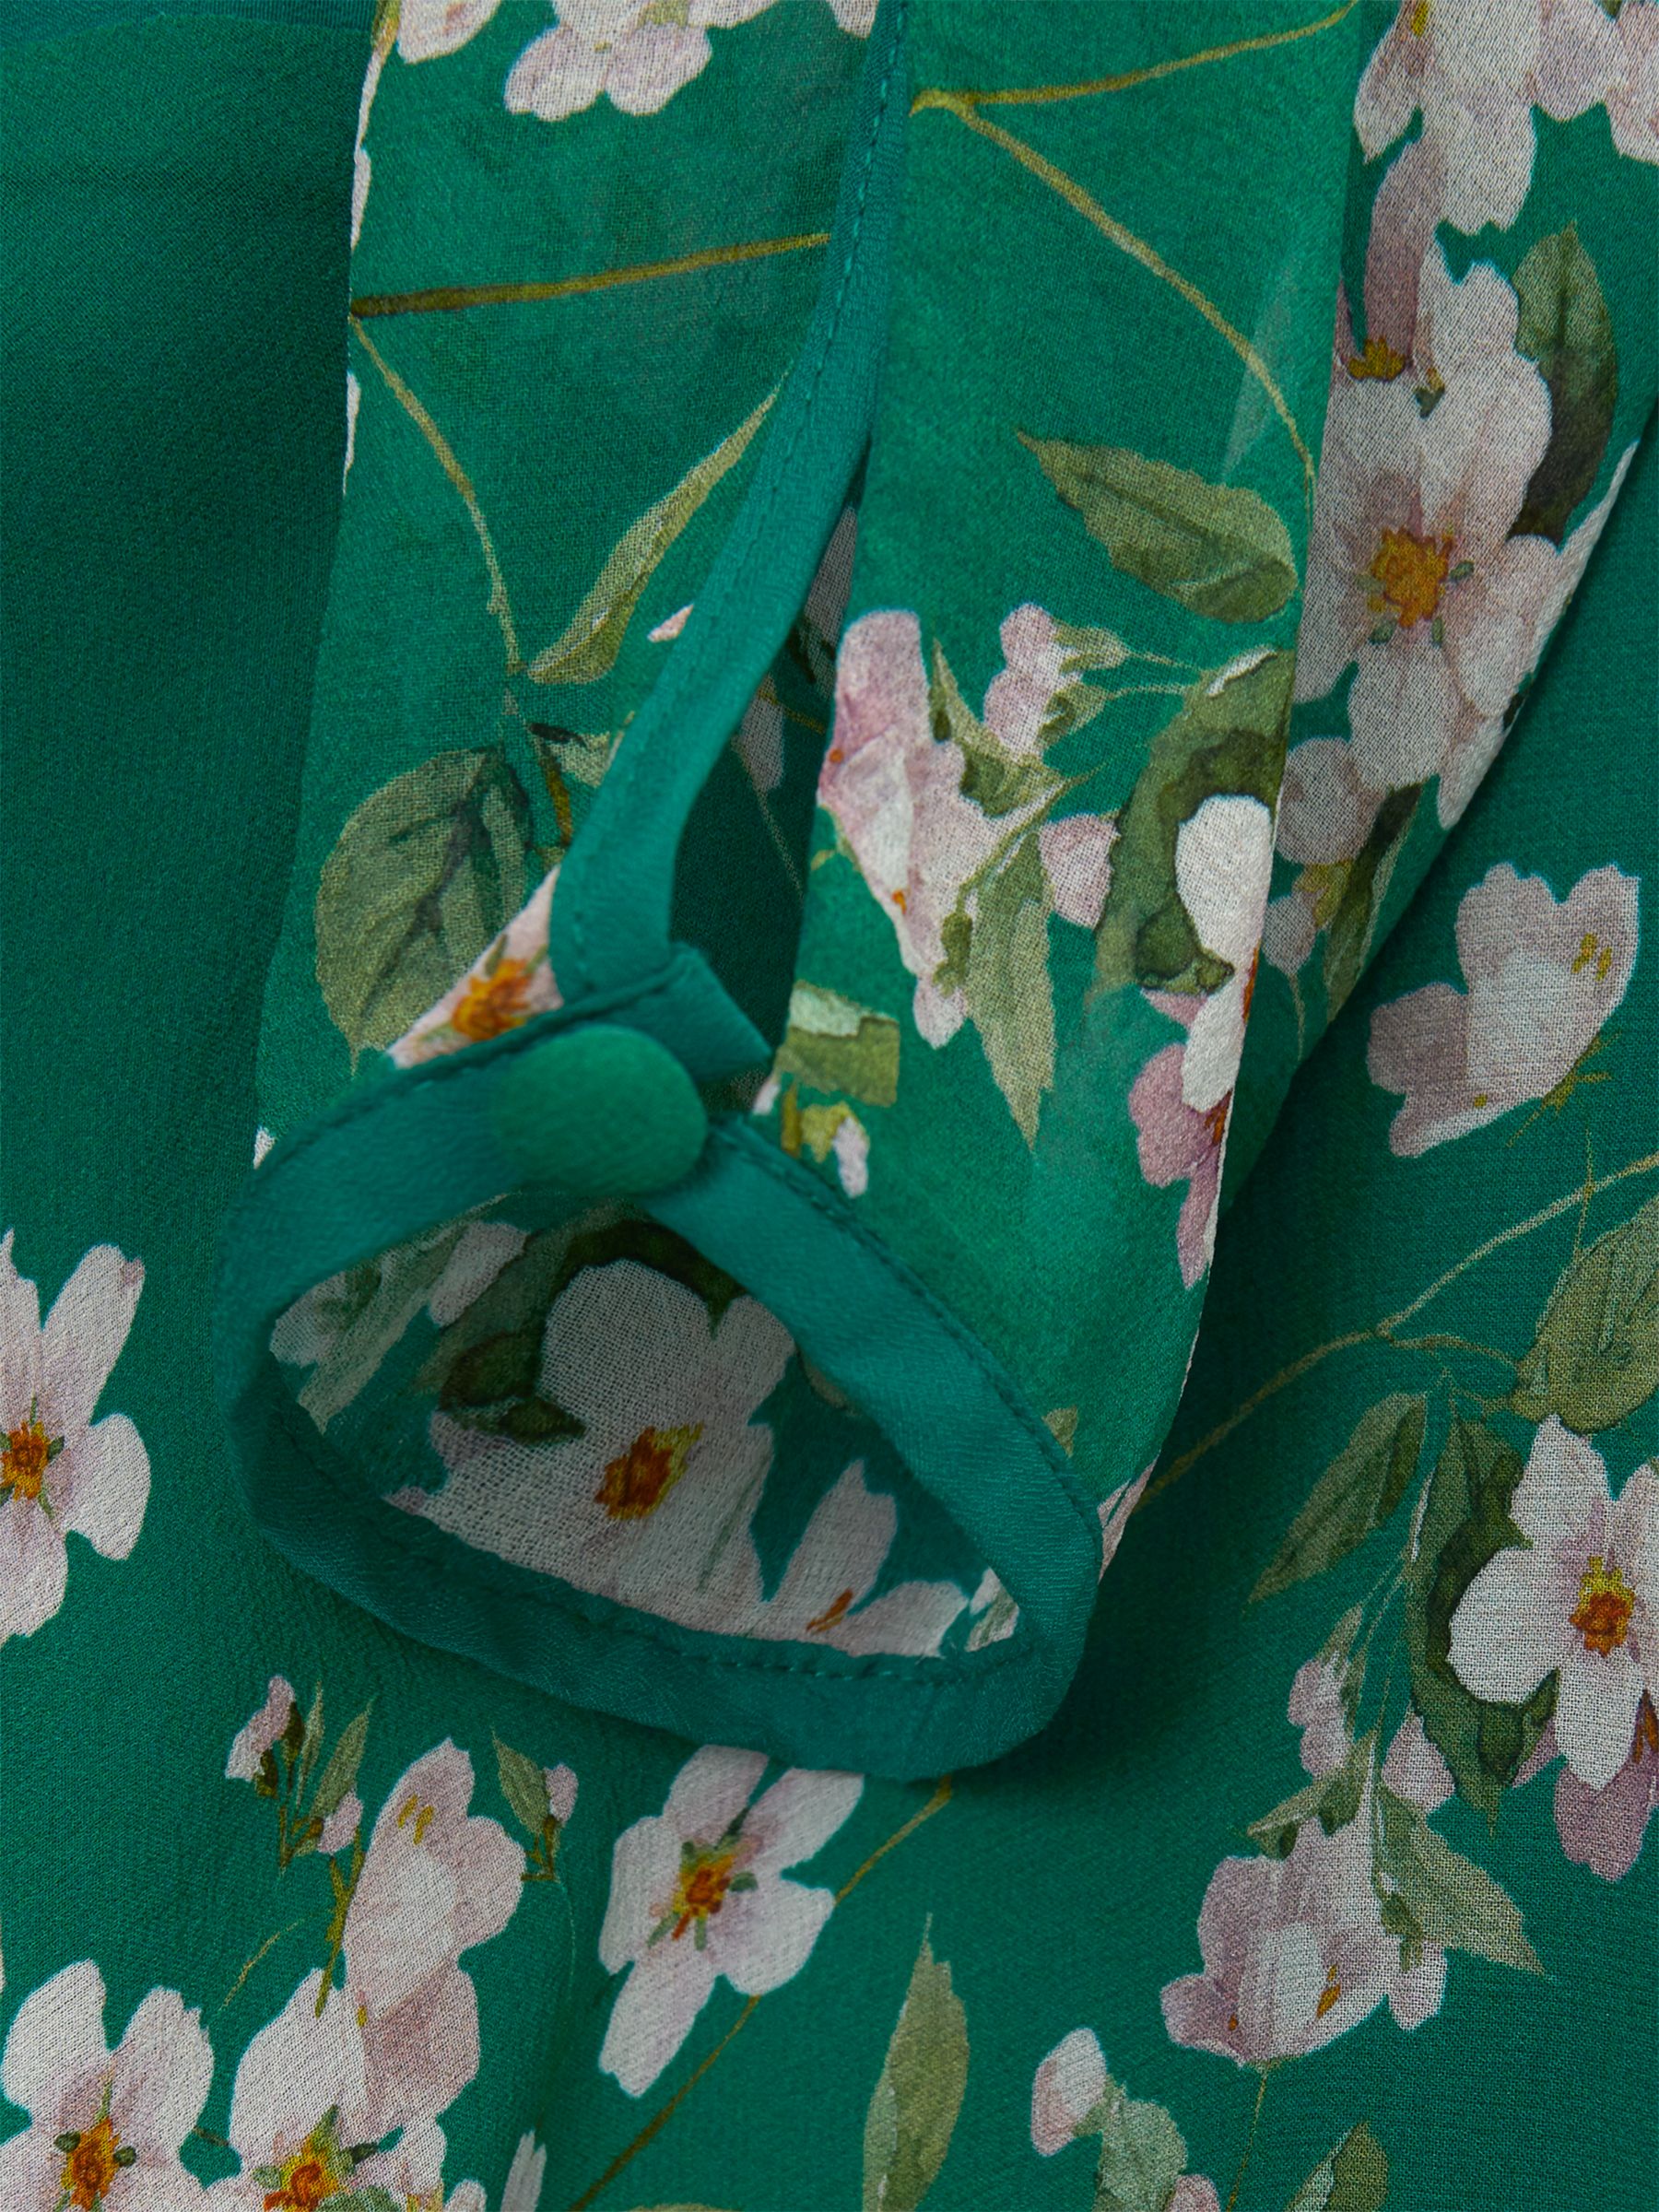 Hobbs Rosabelle Floral Silk Midi Dress, Green/Multi at John Lewis ...